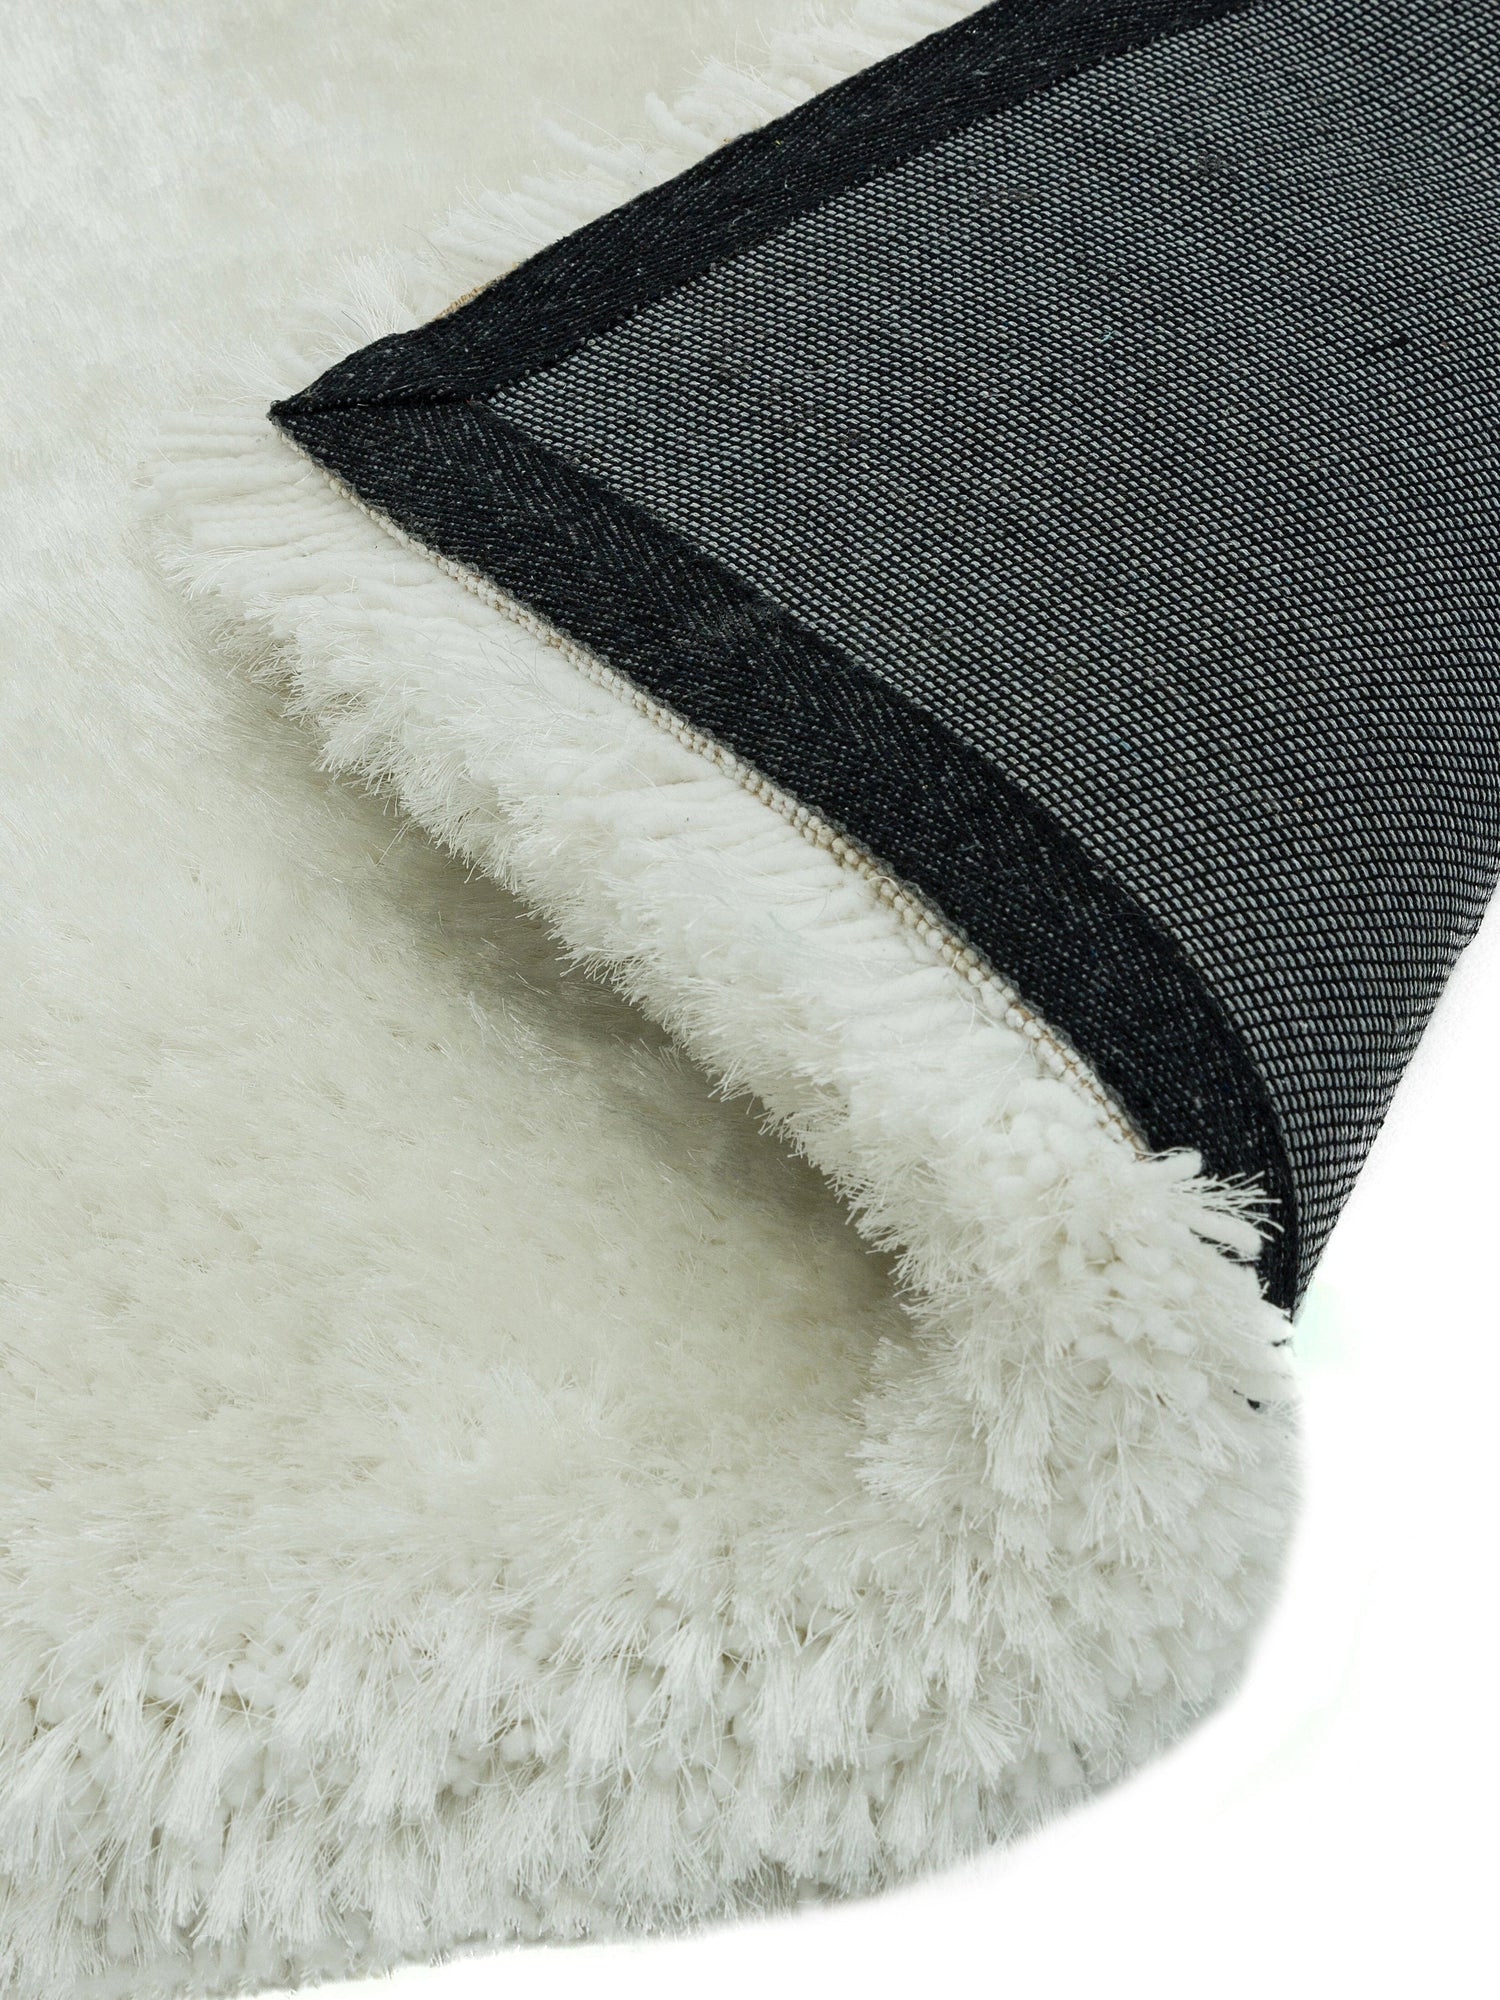  Asiatic Carpets-Asiatic Carpets Plush Hand Woven Rug White - 140 x 200cm-Cream, White 853 